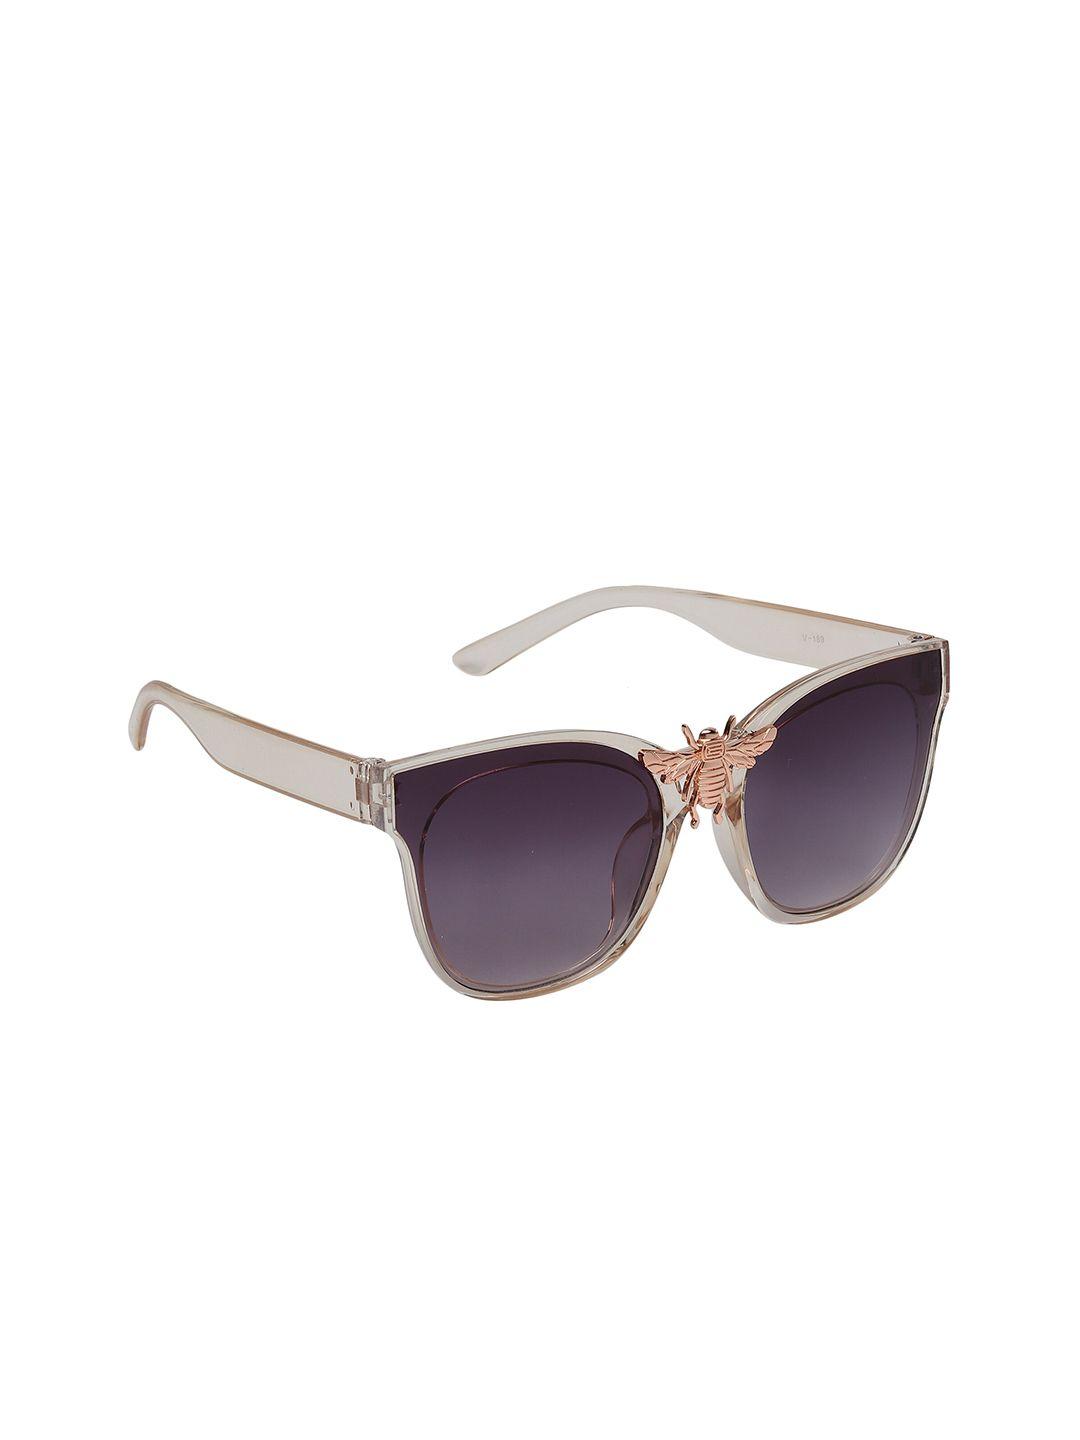 celebrity-sunglasses-unisex-purple-nora-style-wayfarer-sunglasses